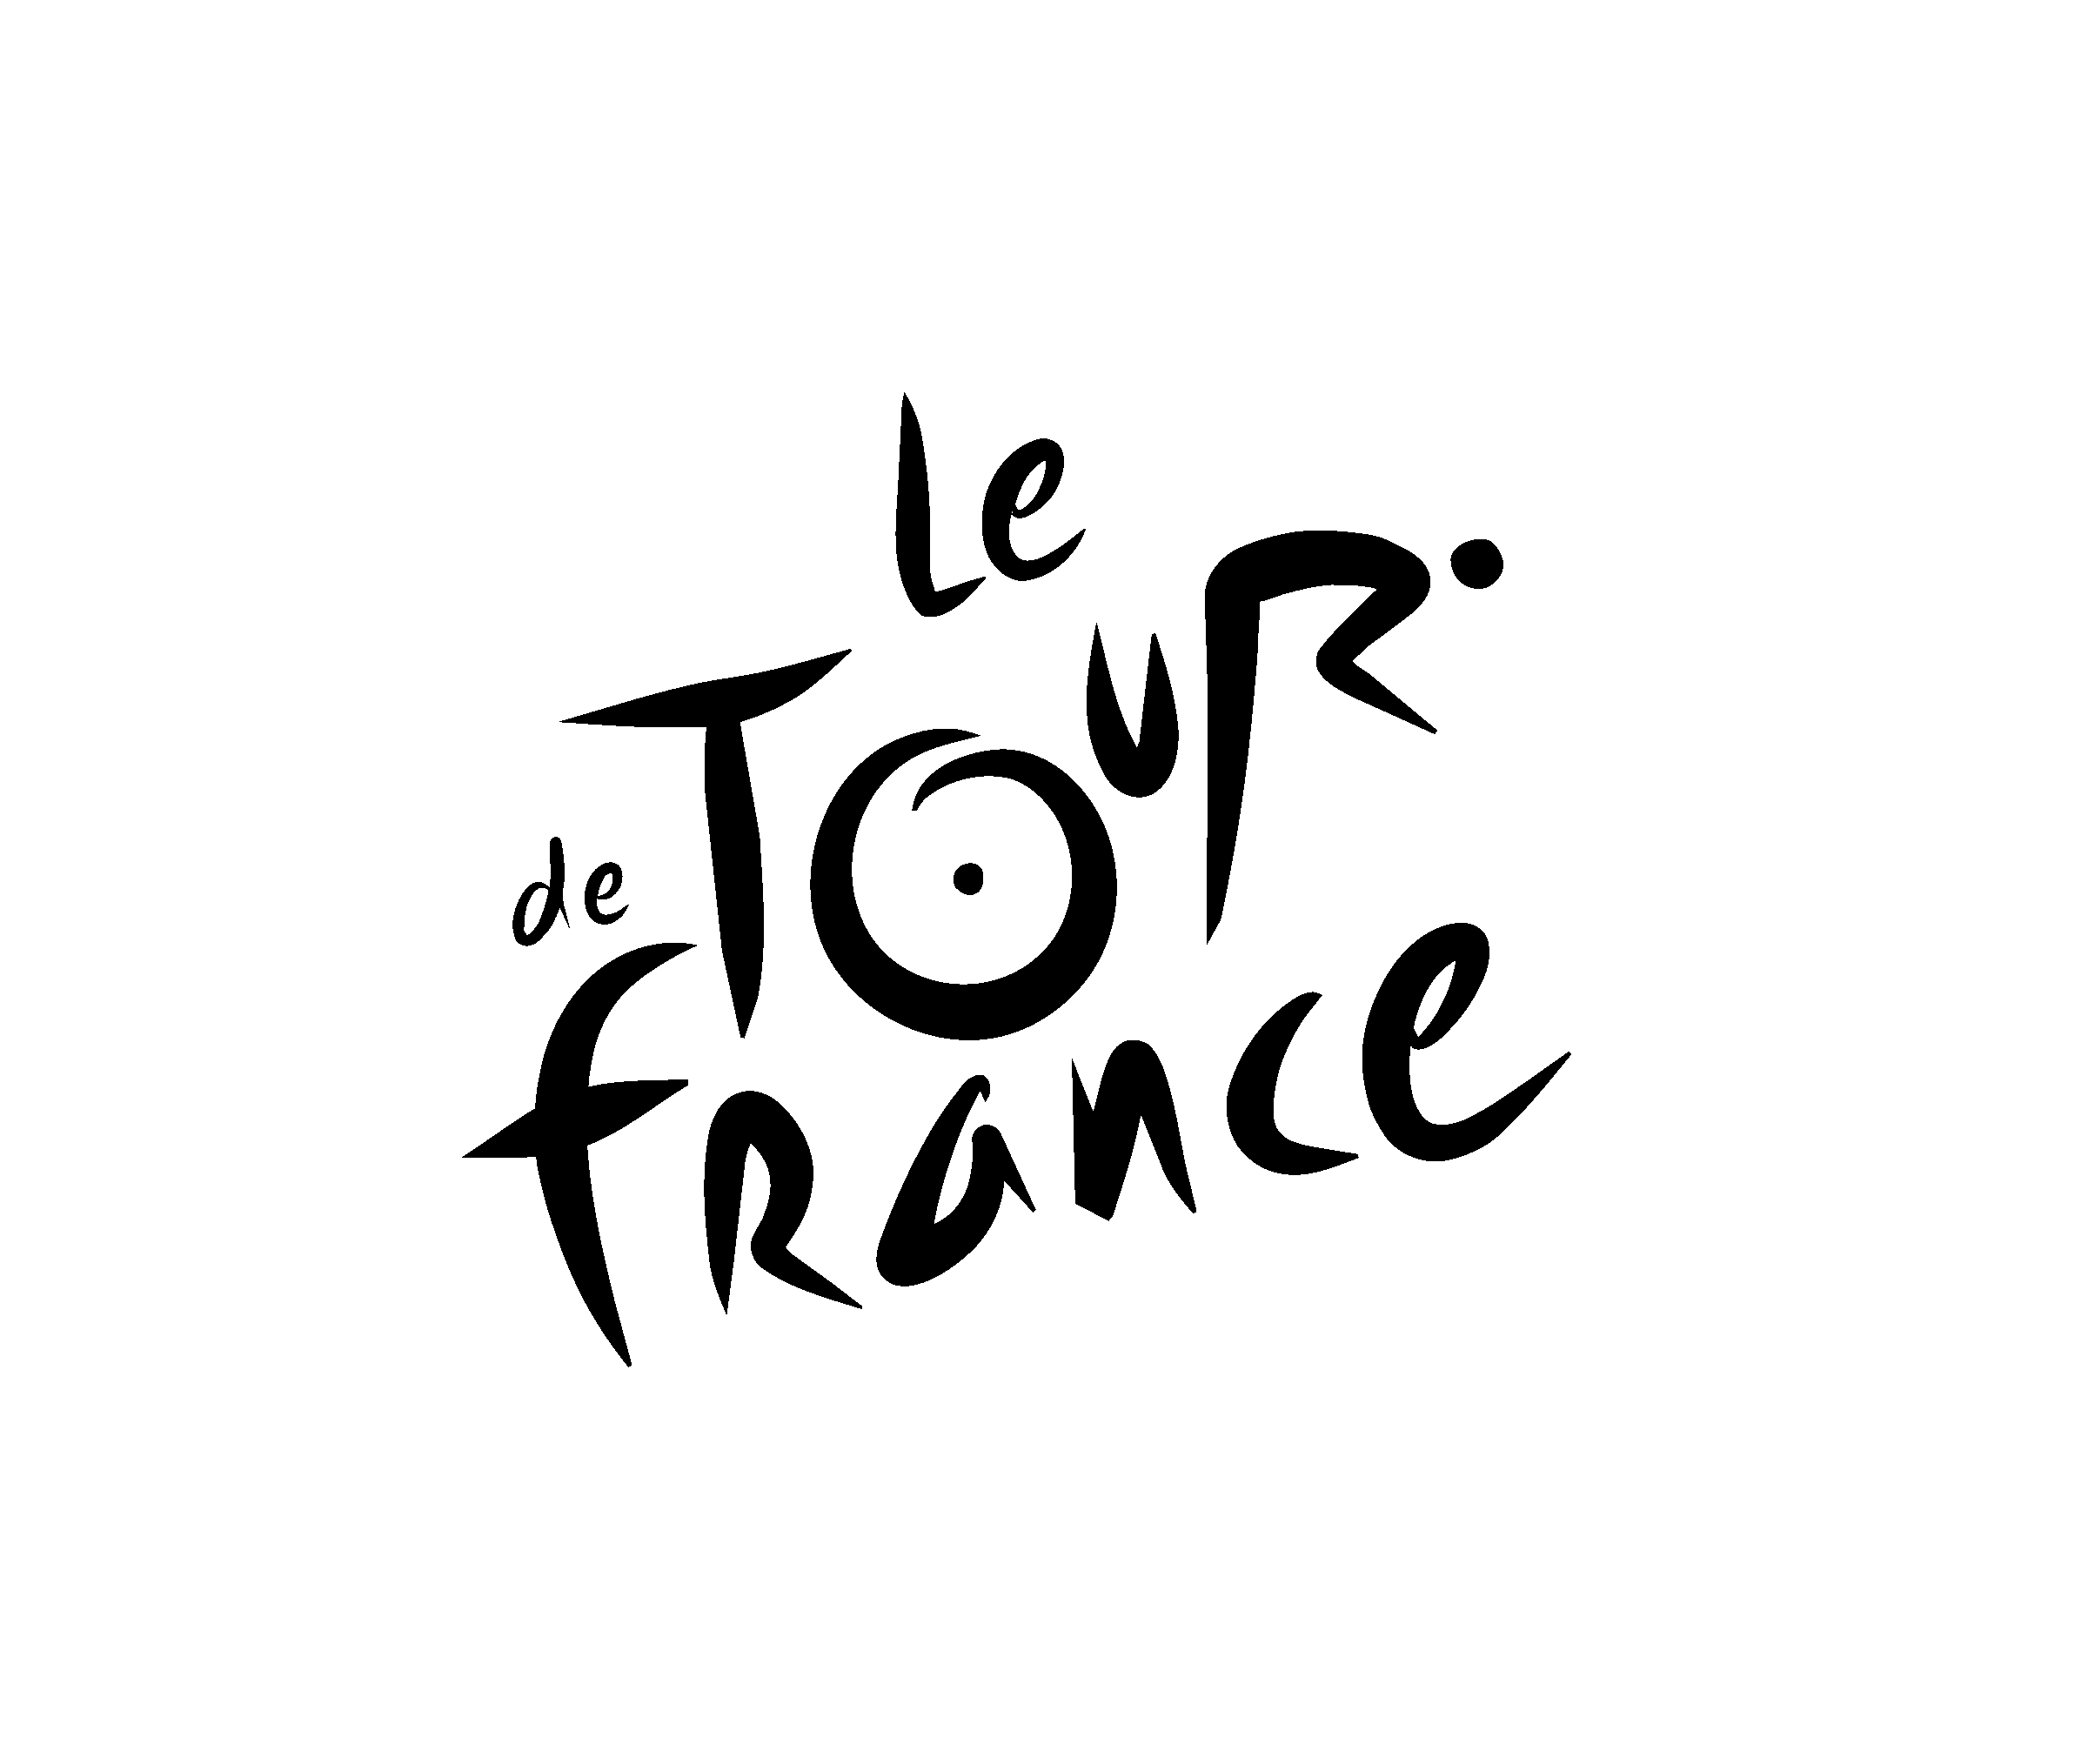 Le Tour De France Logo - Le Tour de France Logo PNG Transparent & SVG Vector - Freebie Supply